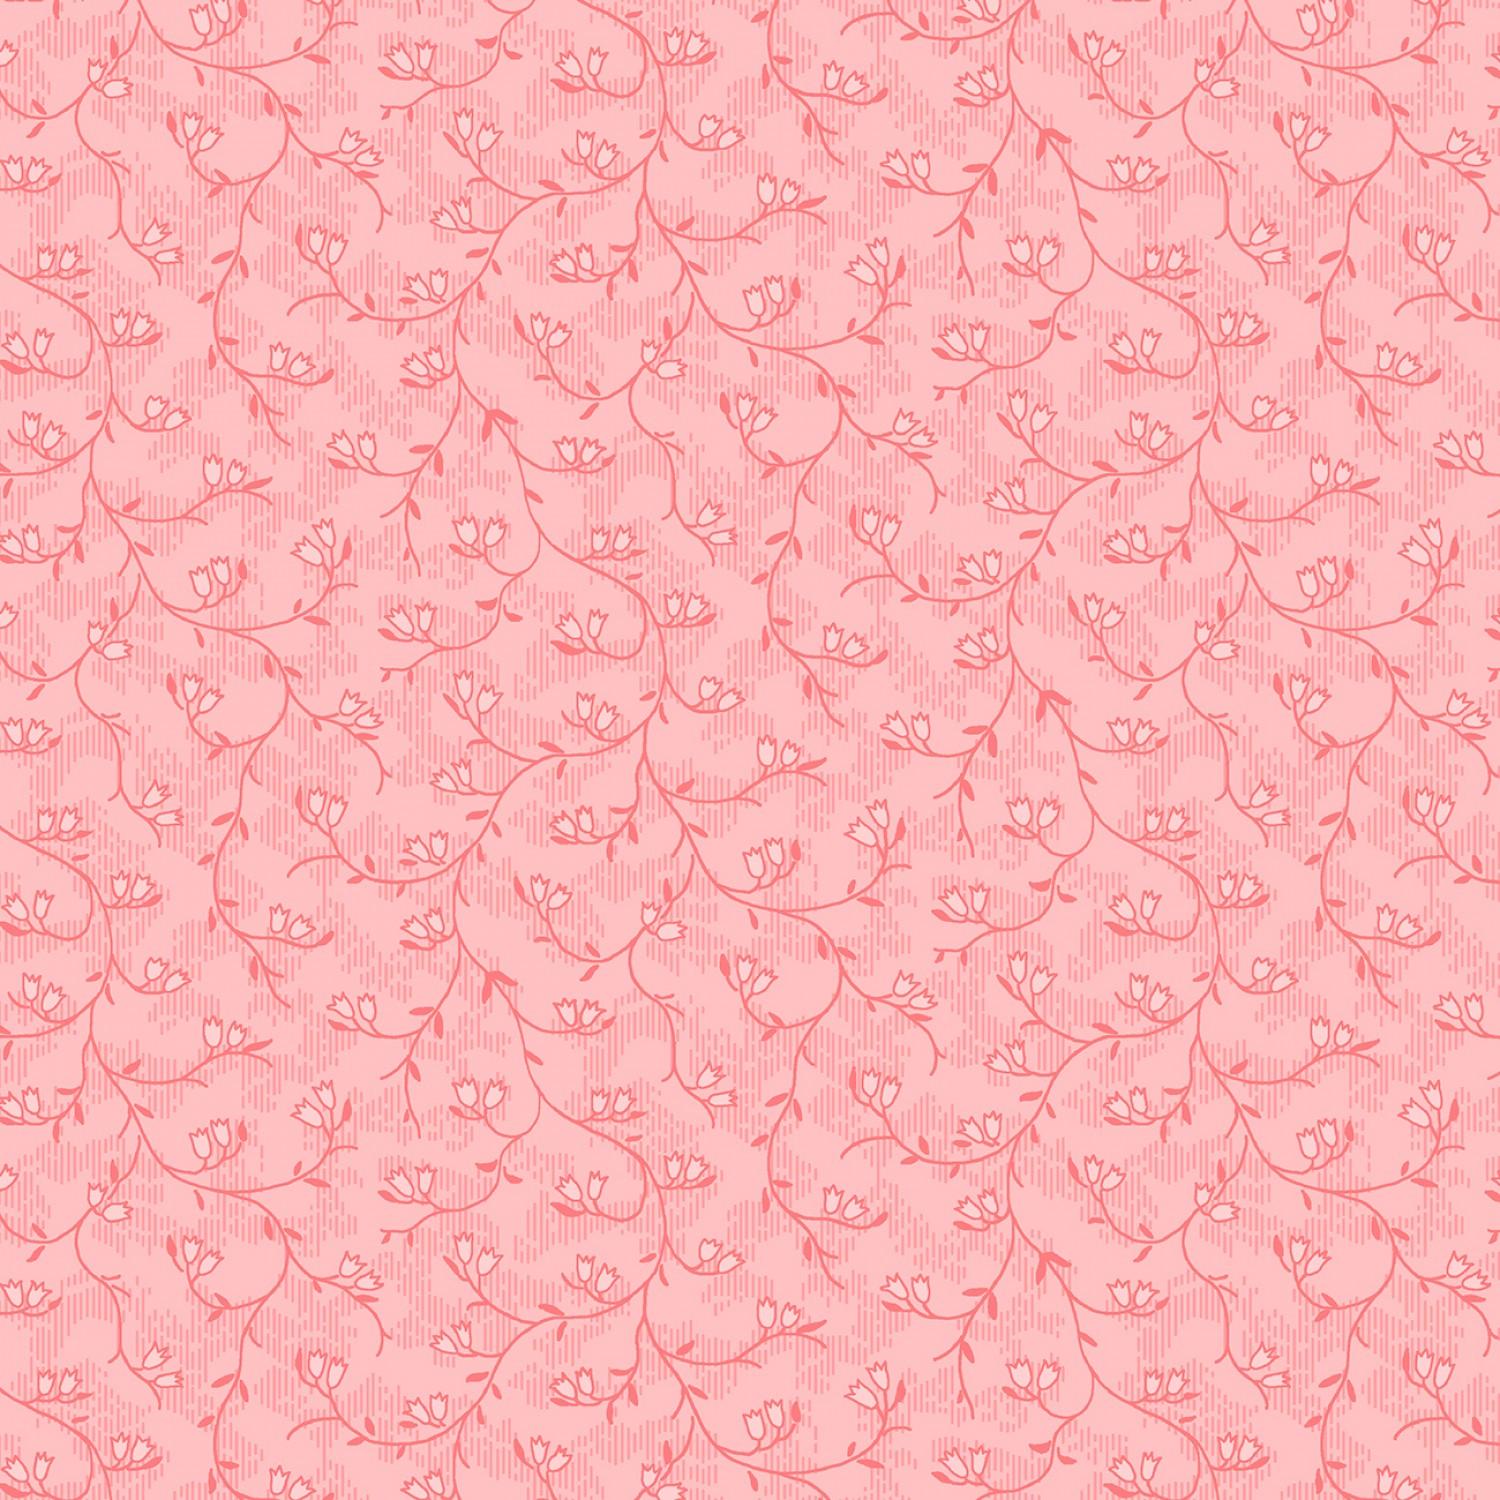 Pathways - Pink Tonal Bell Flowers # 98703-313